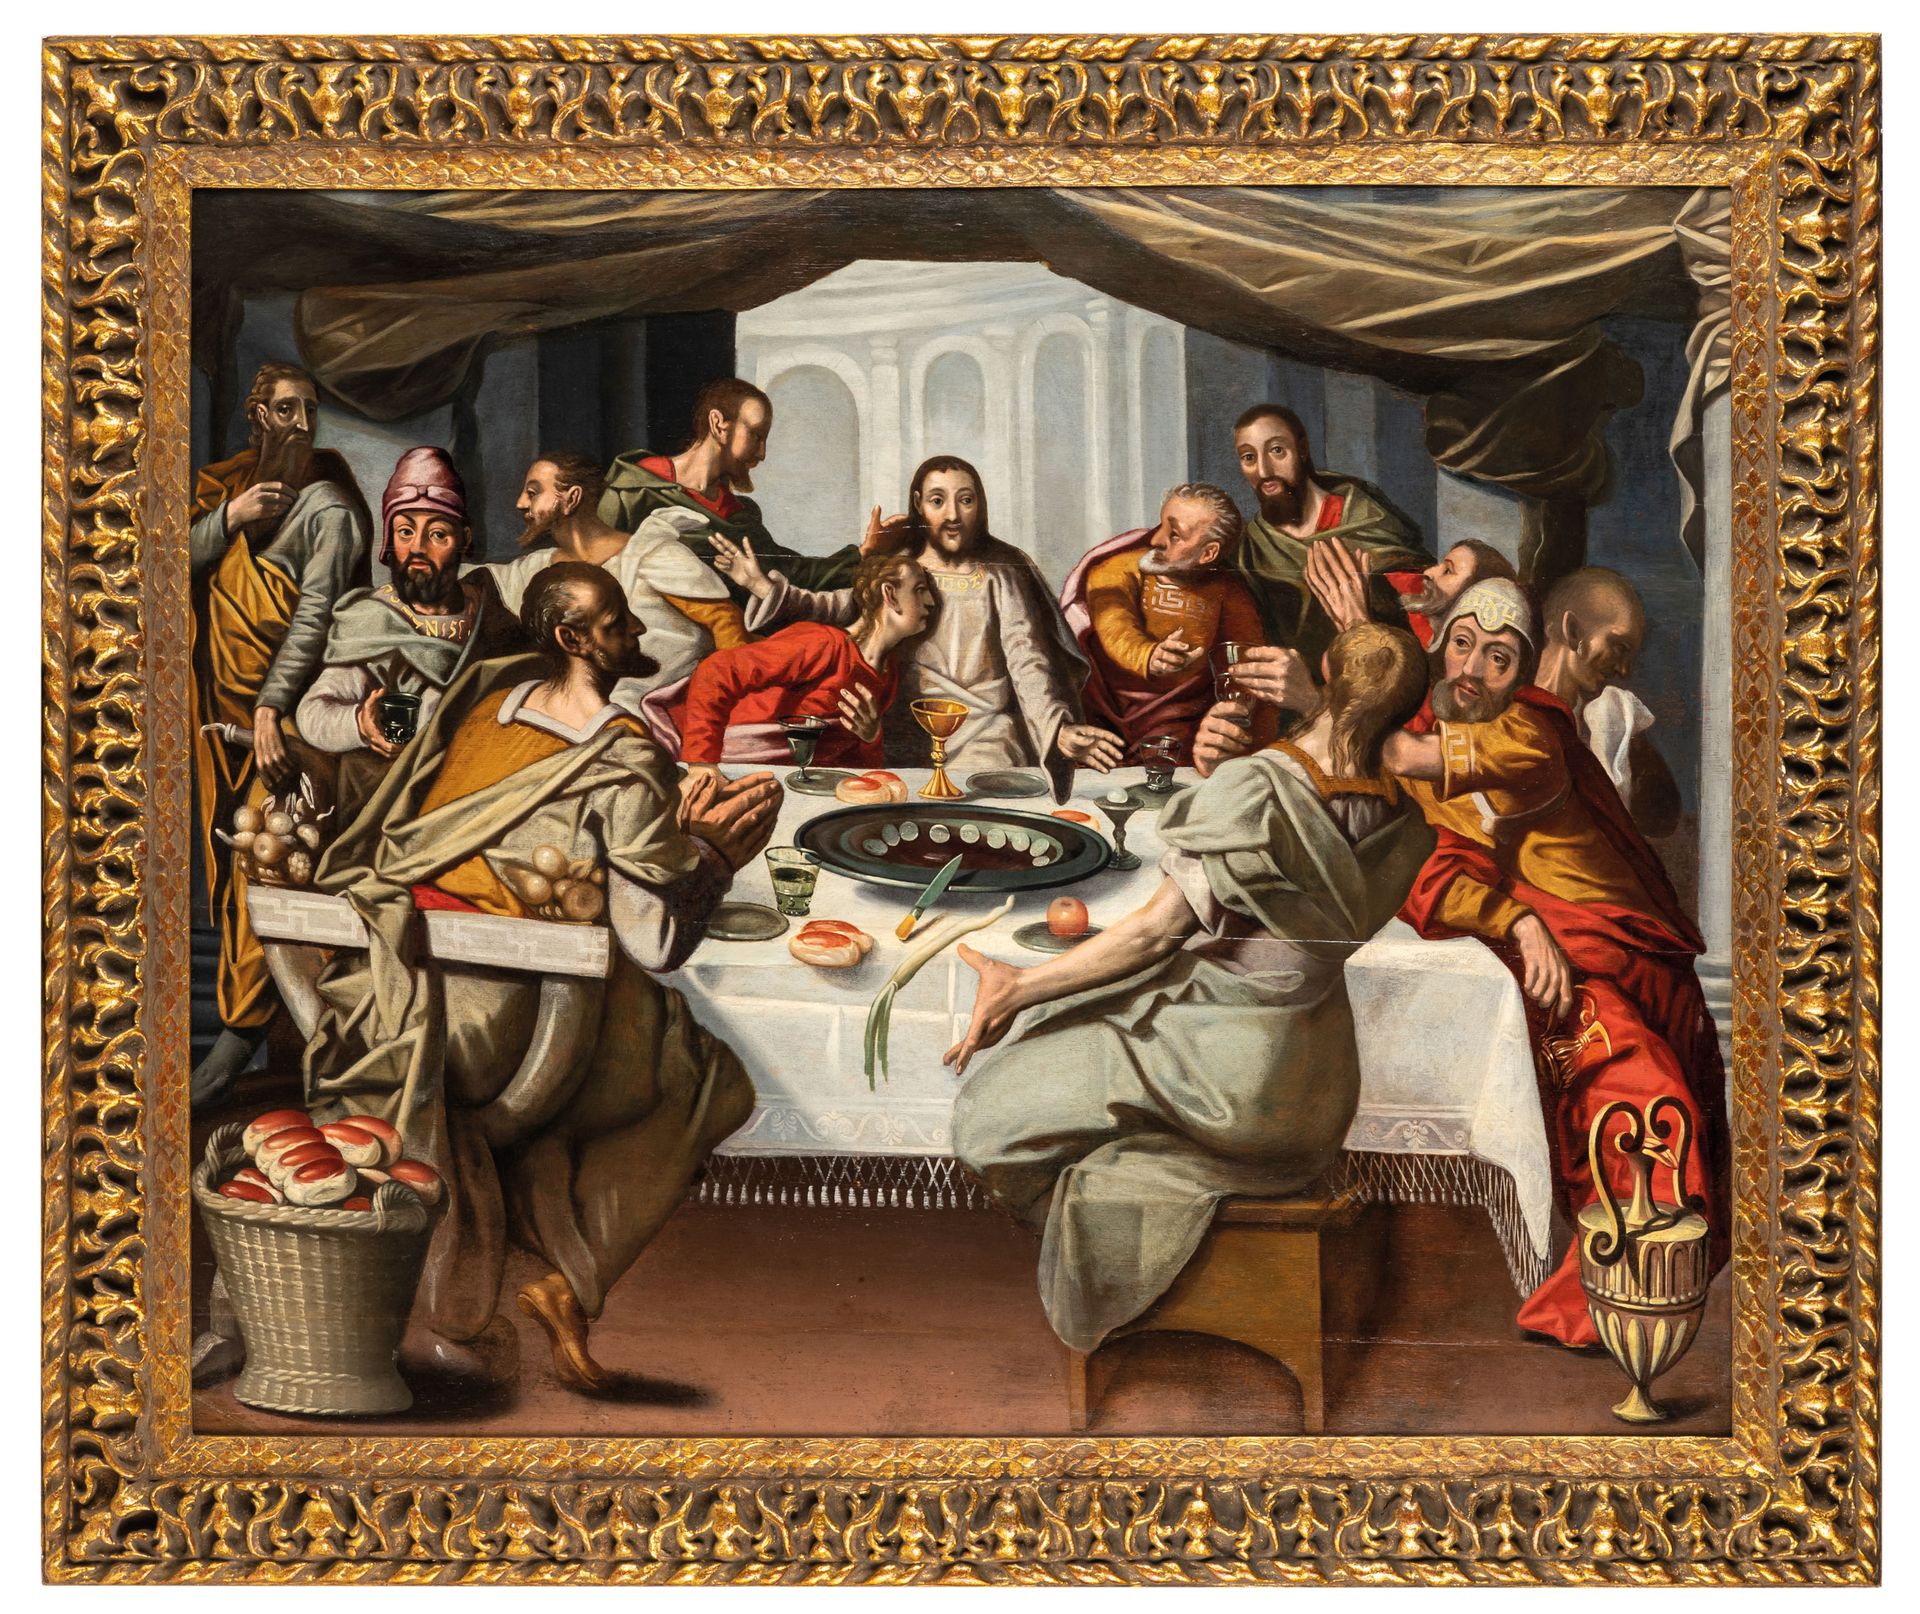 LAMBERT LOMBARD (cerchia di) (Liège, 1505 - 1566)
最后的晚餐
面板油画，95X115厘米

这幅画显示了接近佛&hellip;